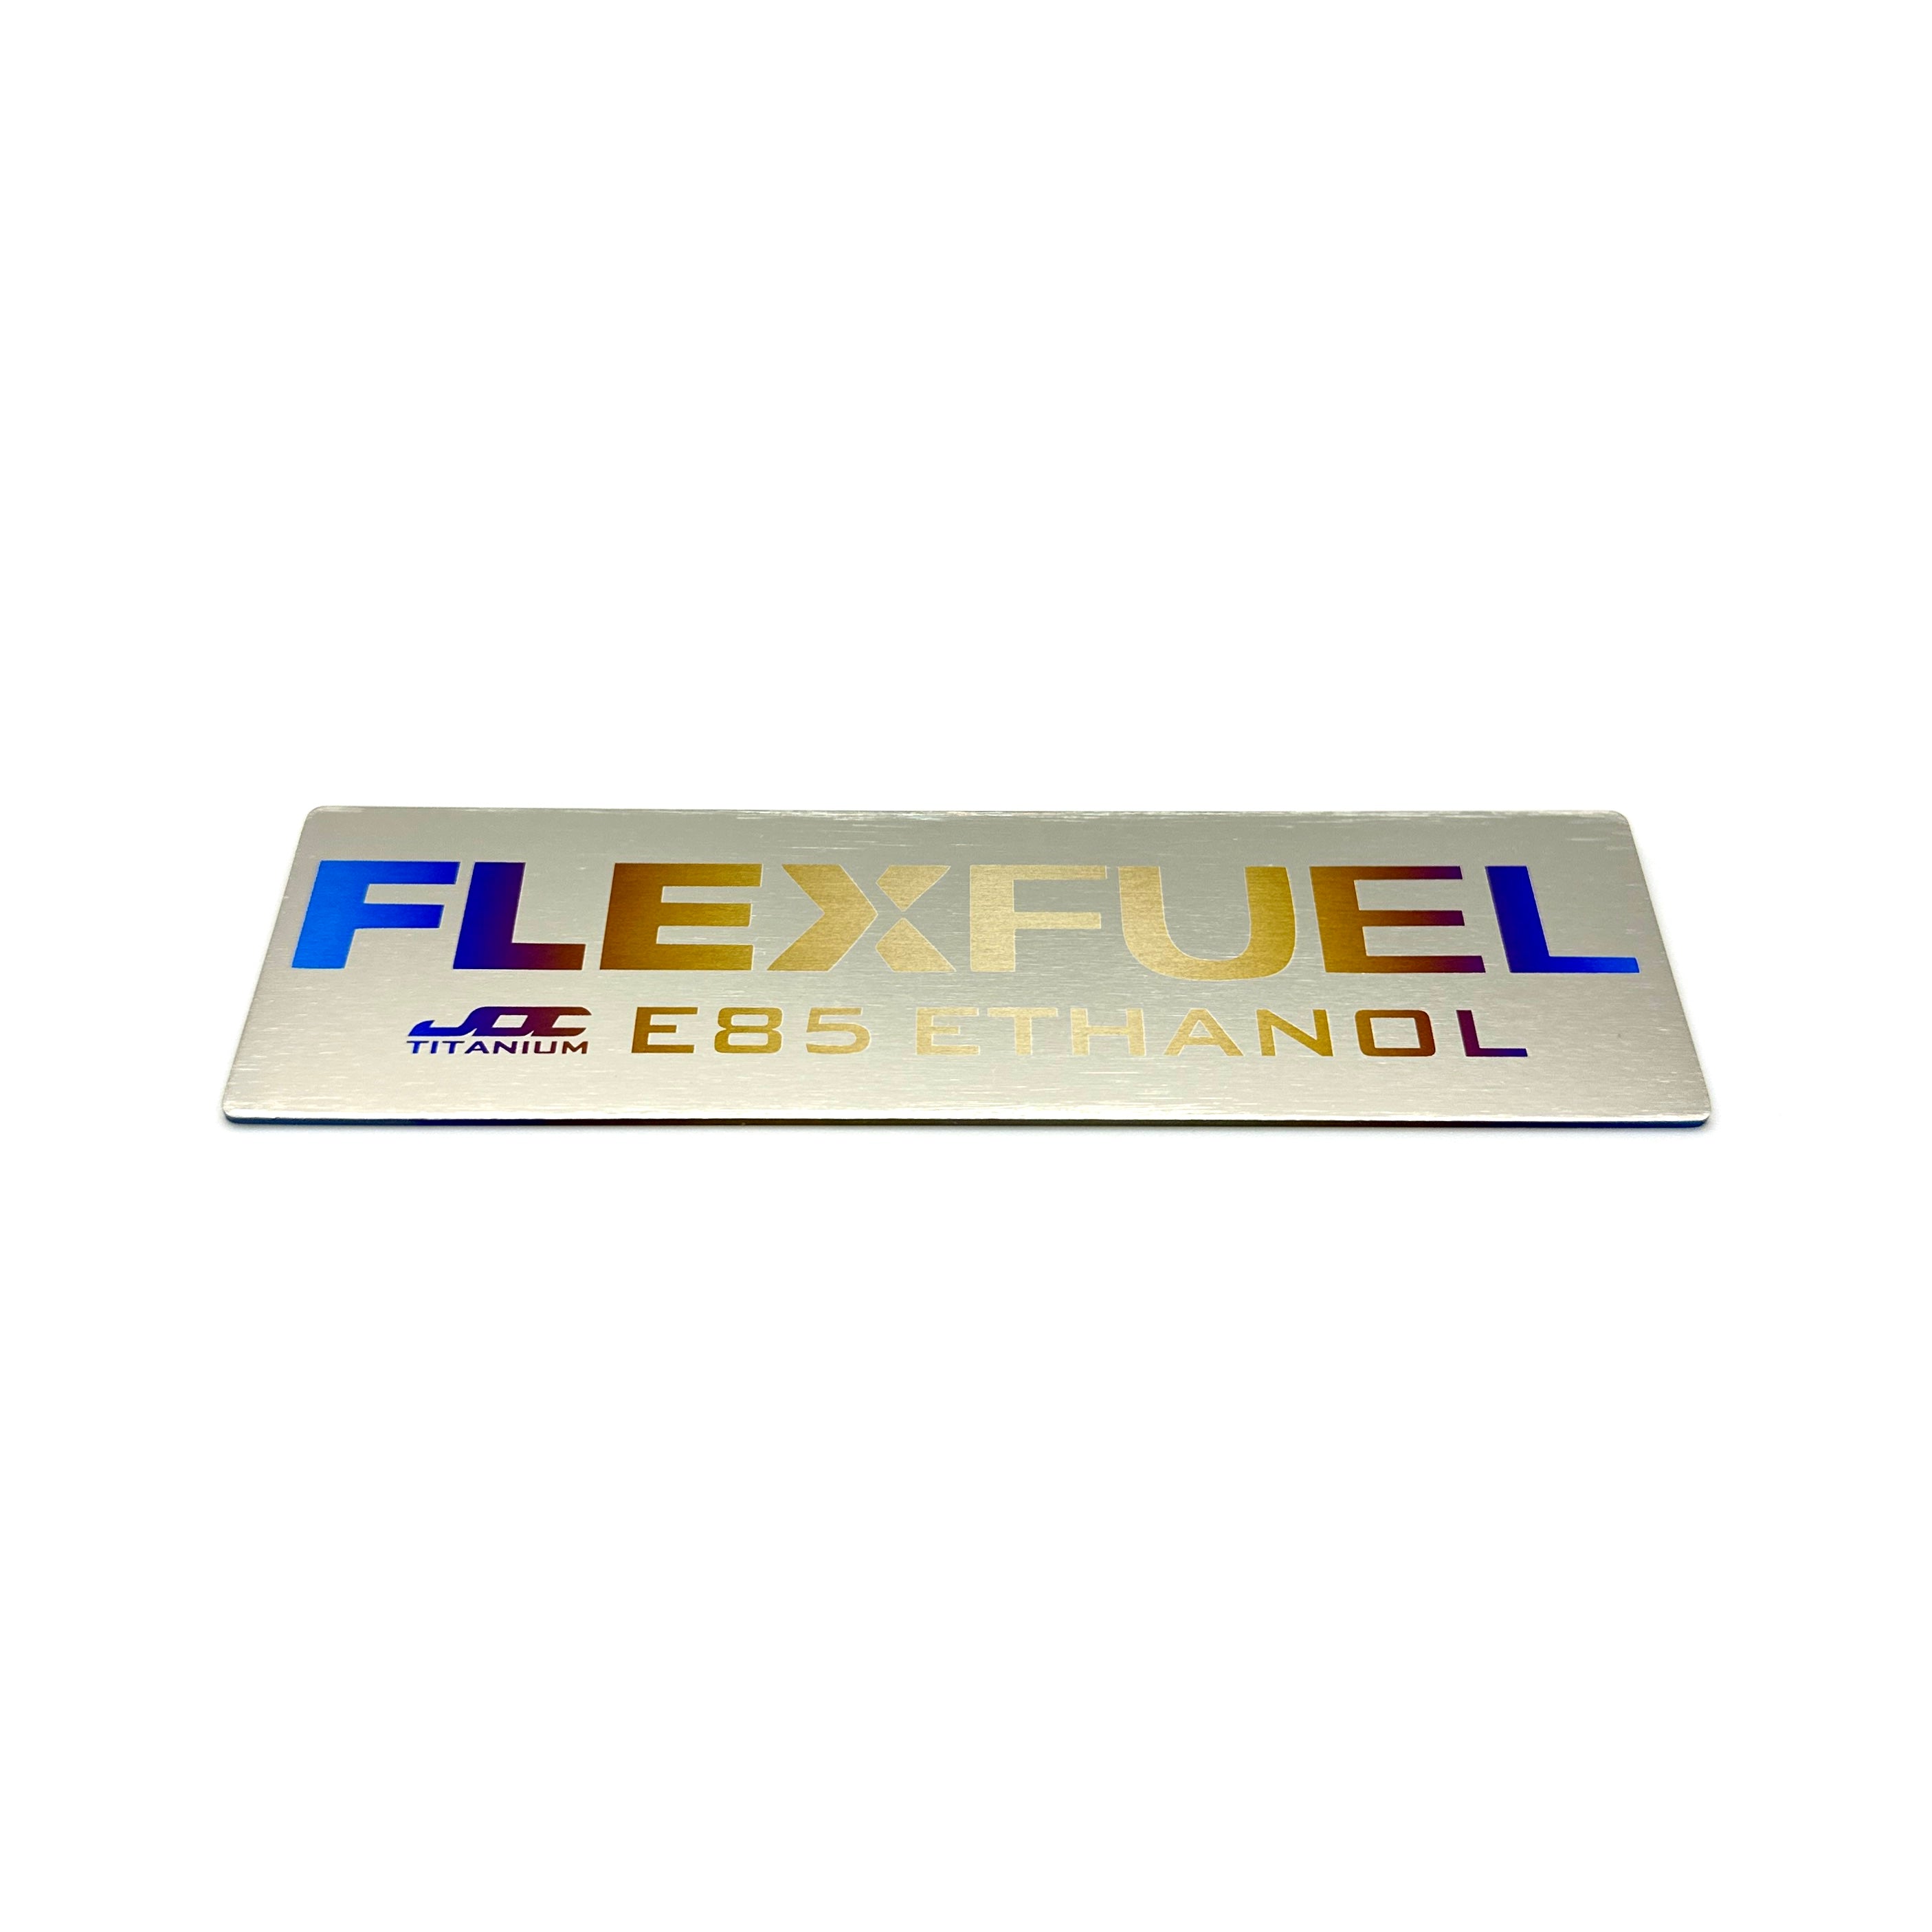 Insignia de combustible flexible/etanol JDC Titanium E85 (universal)